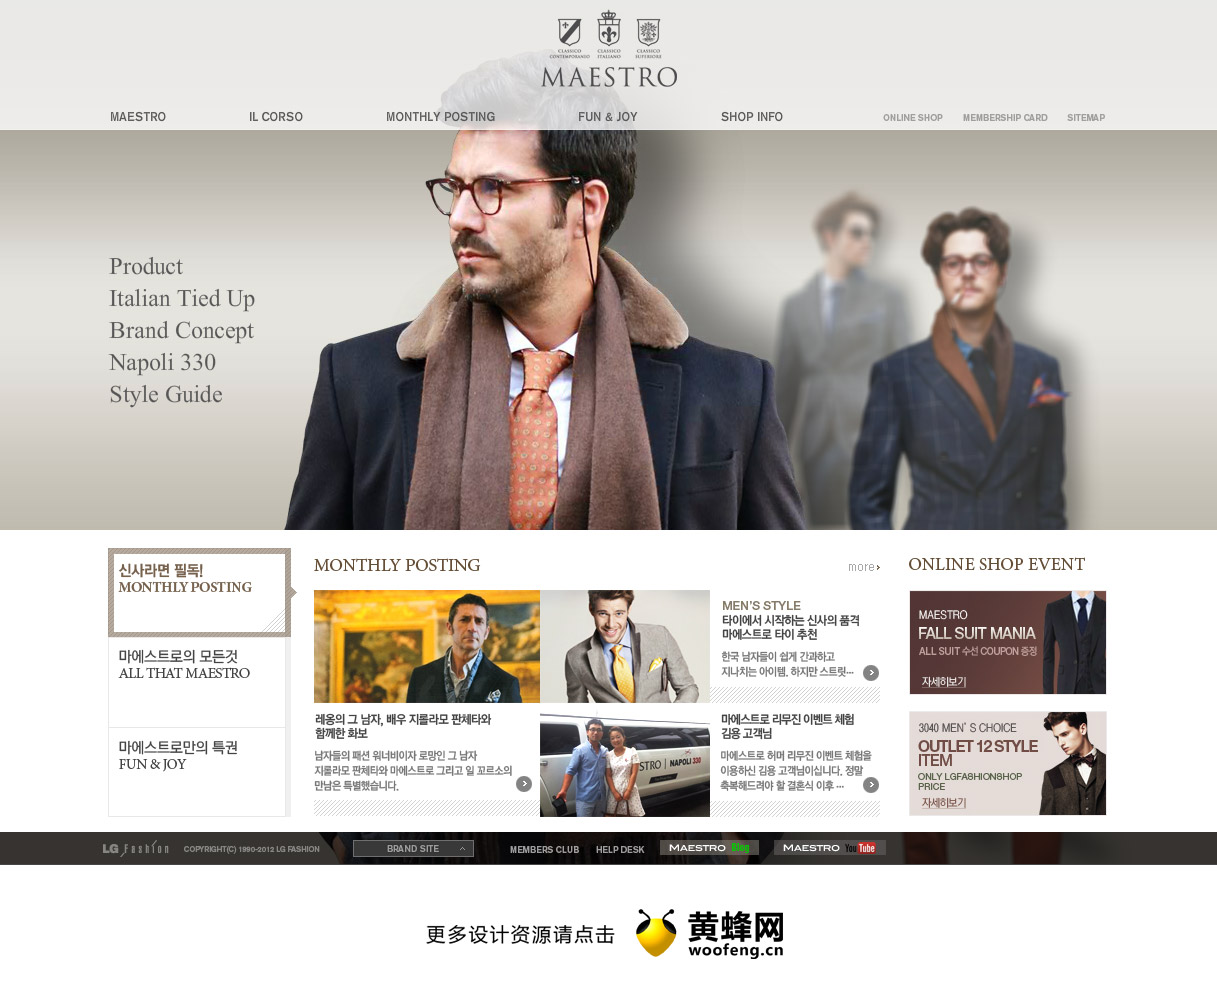 MAESTRO韩国男装品牌网站，来源自黄蜂网https://woofeng.cn/web/